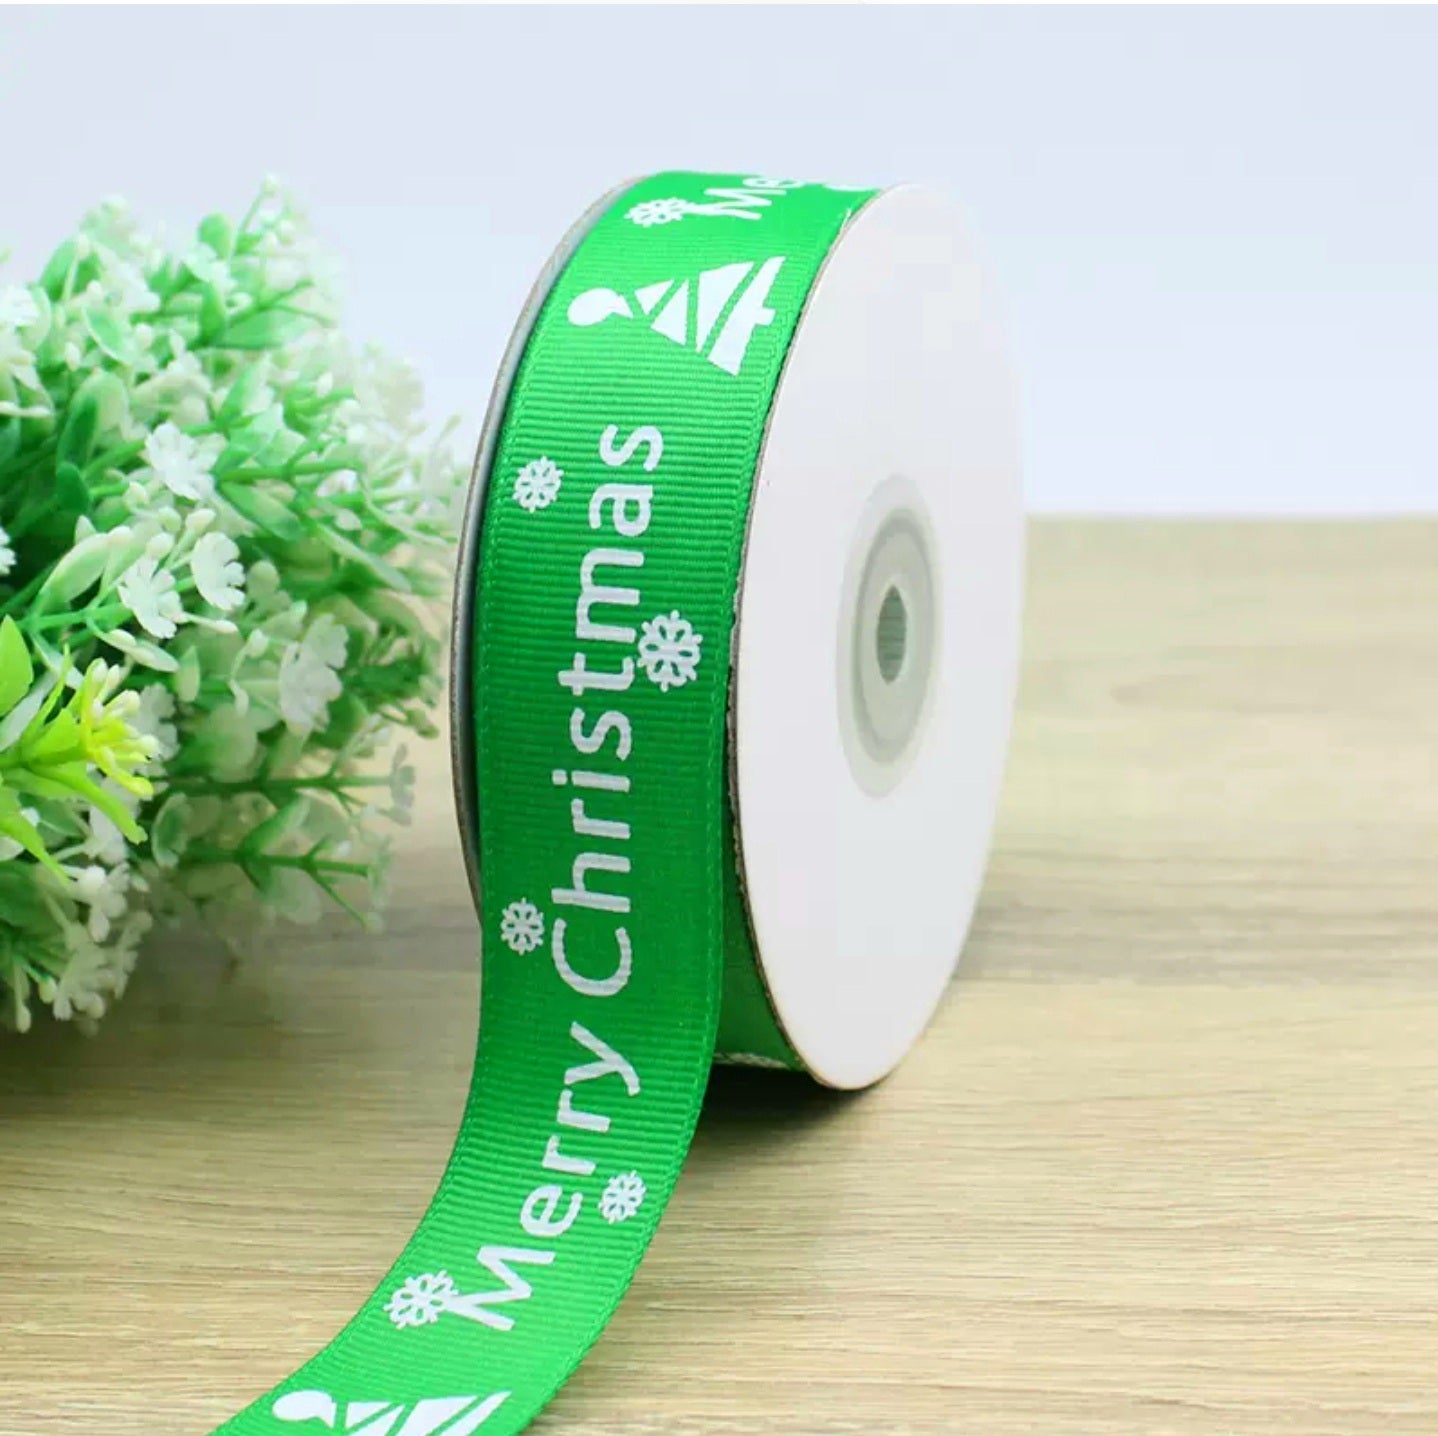 MajorCrafts 25mm 22metres Green 'Merry Christmas' Printed Grosgrain Fabric Ribbon